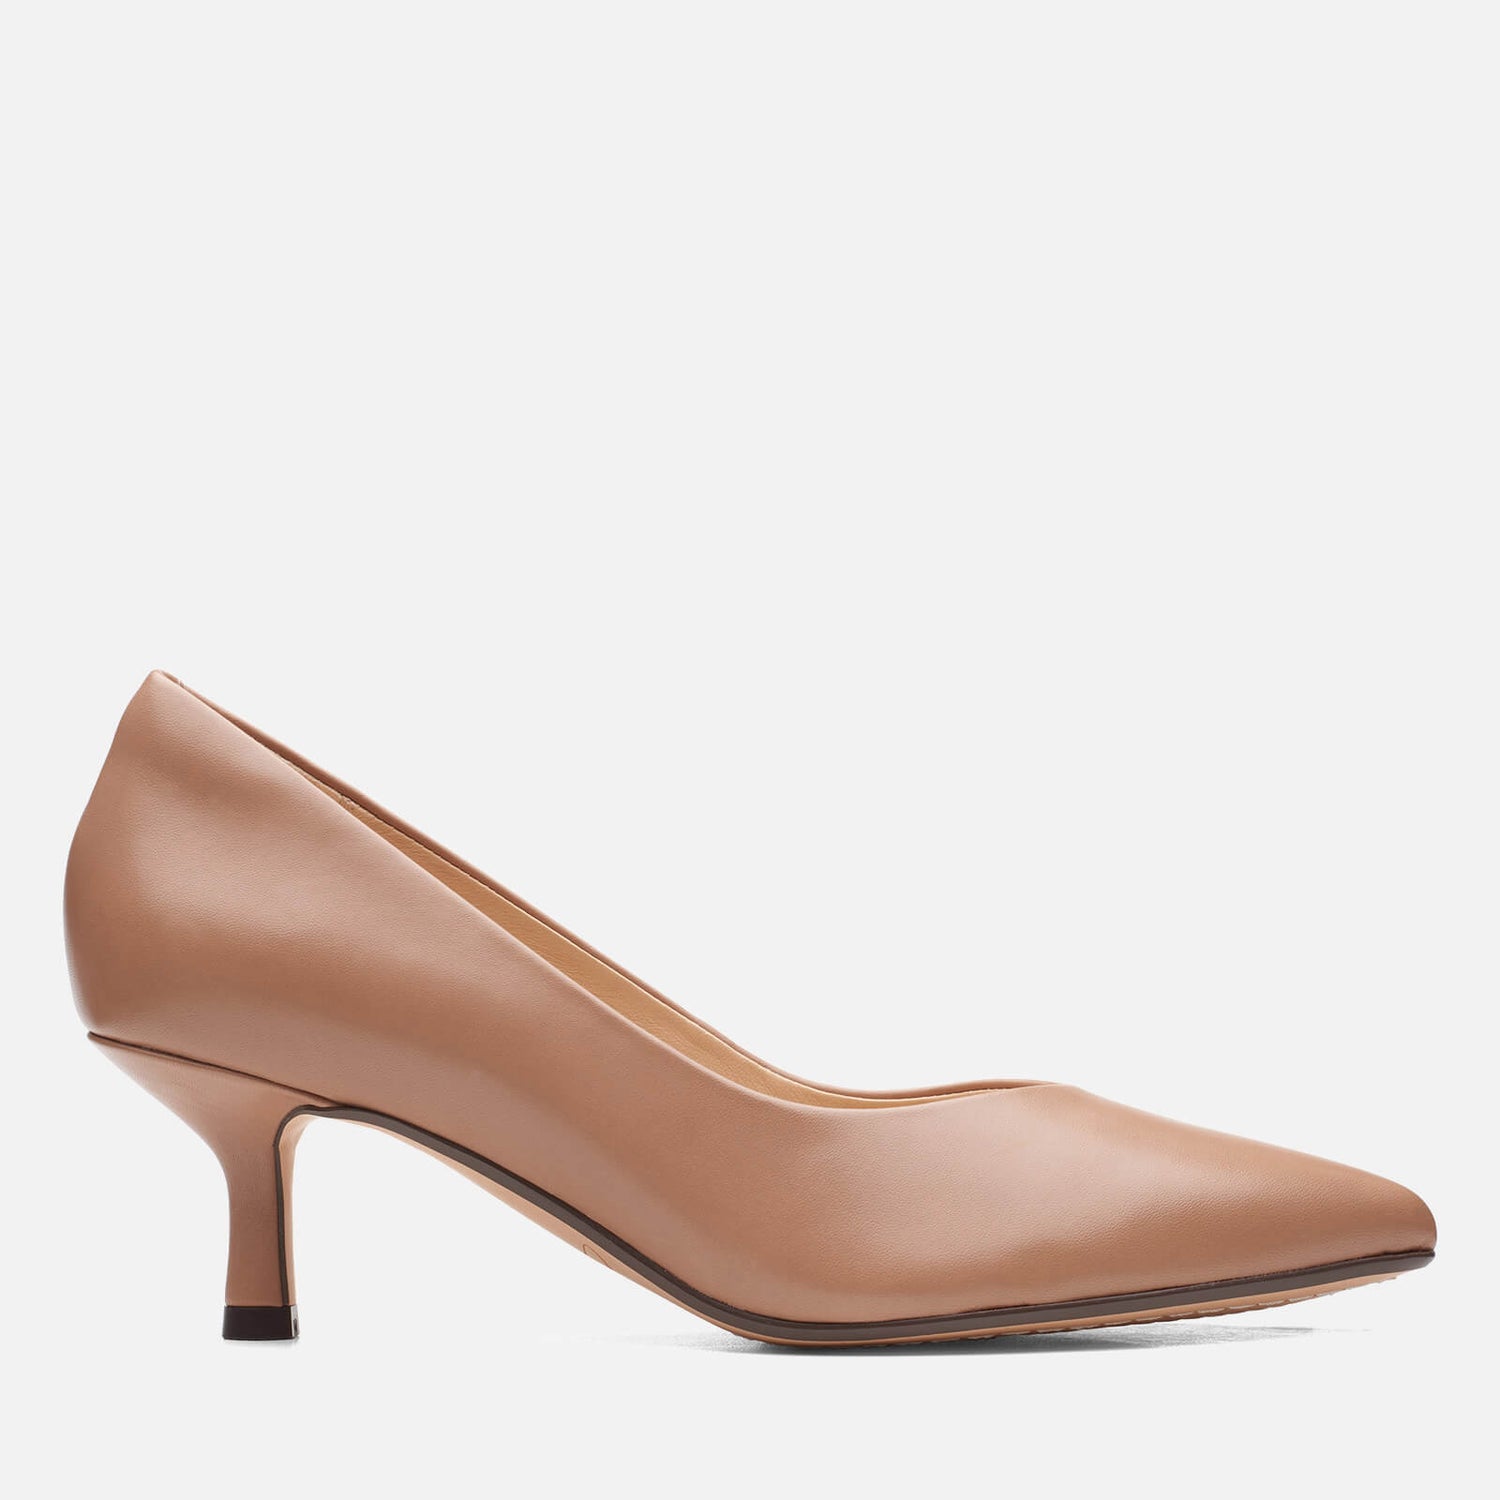 Clarks Women's Violet Leather Court Shoes - Praline - UK 3